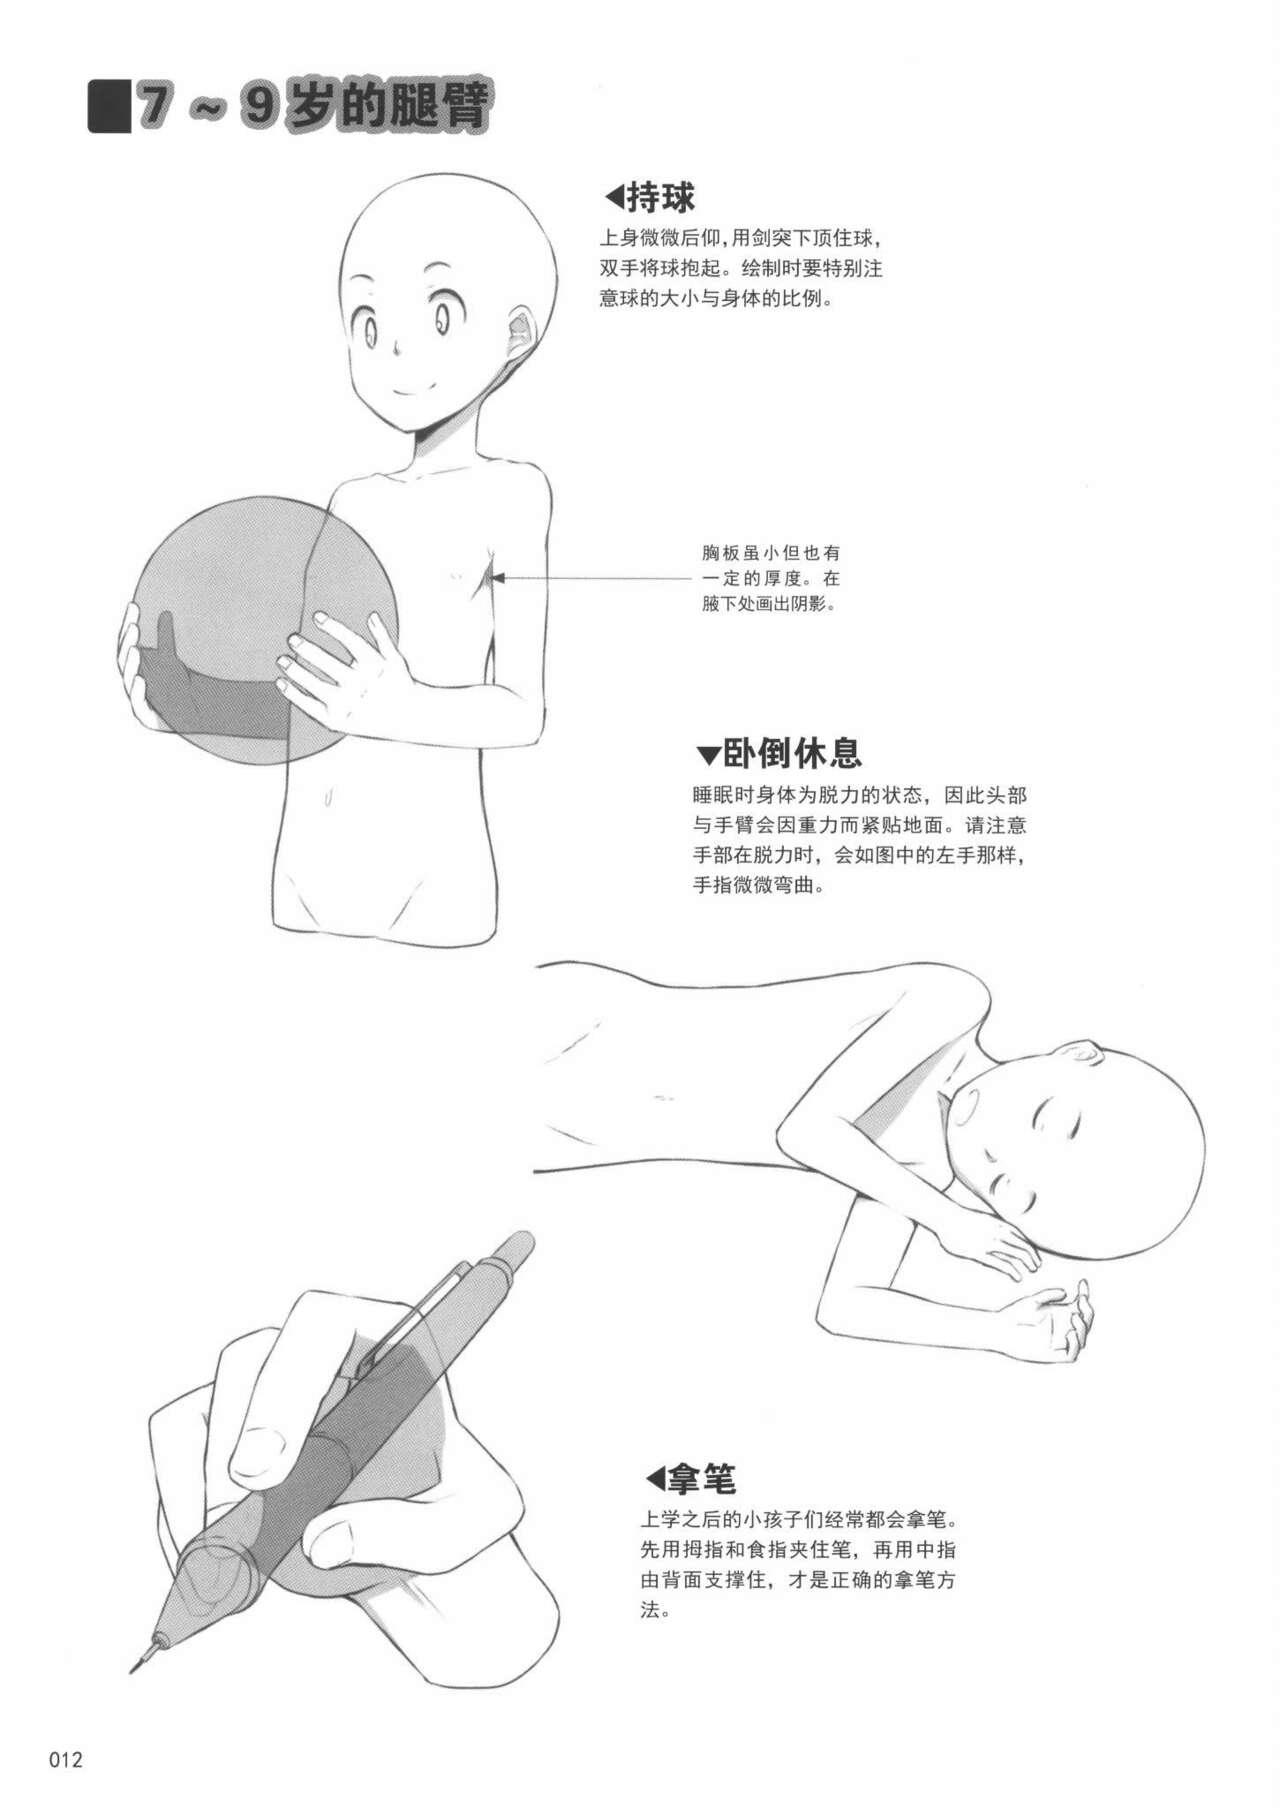 How to draw a boy 11